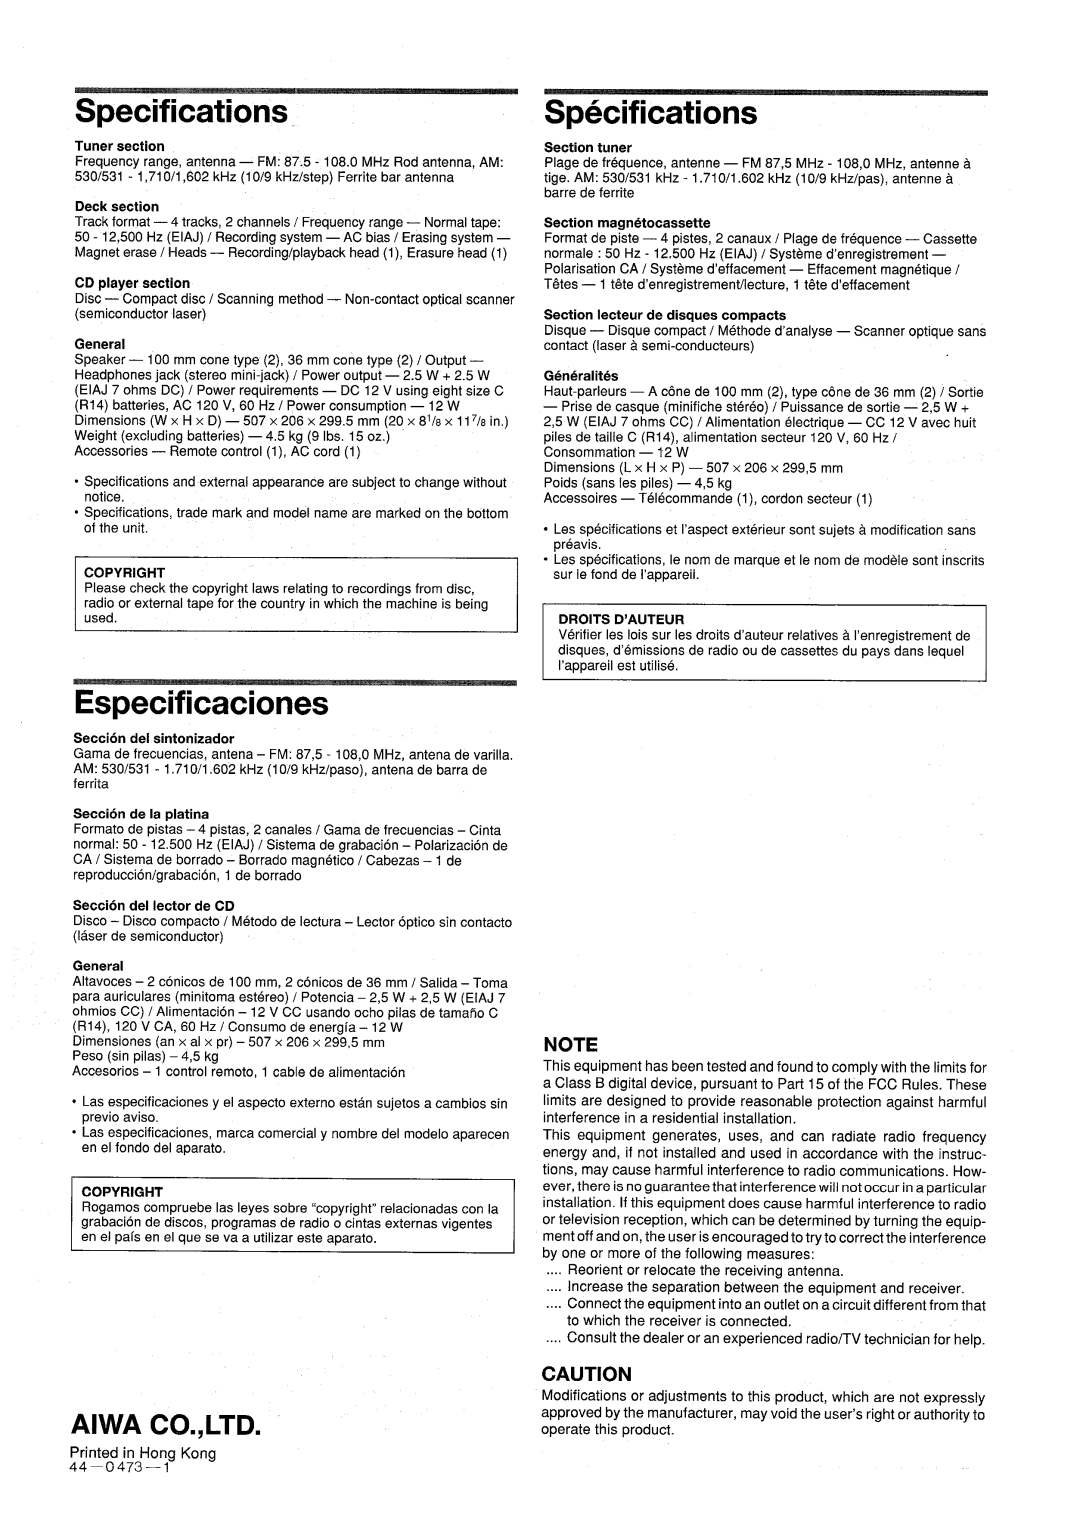 Aiwa CSD-ED87 manual Specifications, Especificaciones, Tuner section, Deck section, Copyright, Droits D’Auteur 